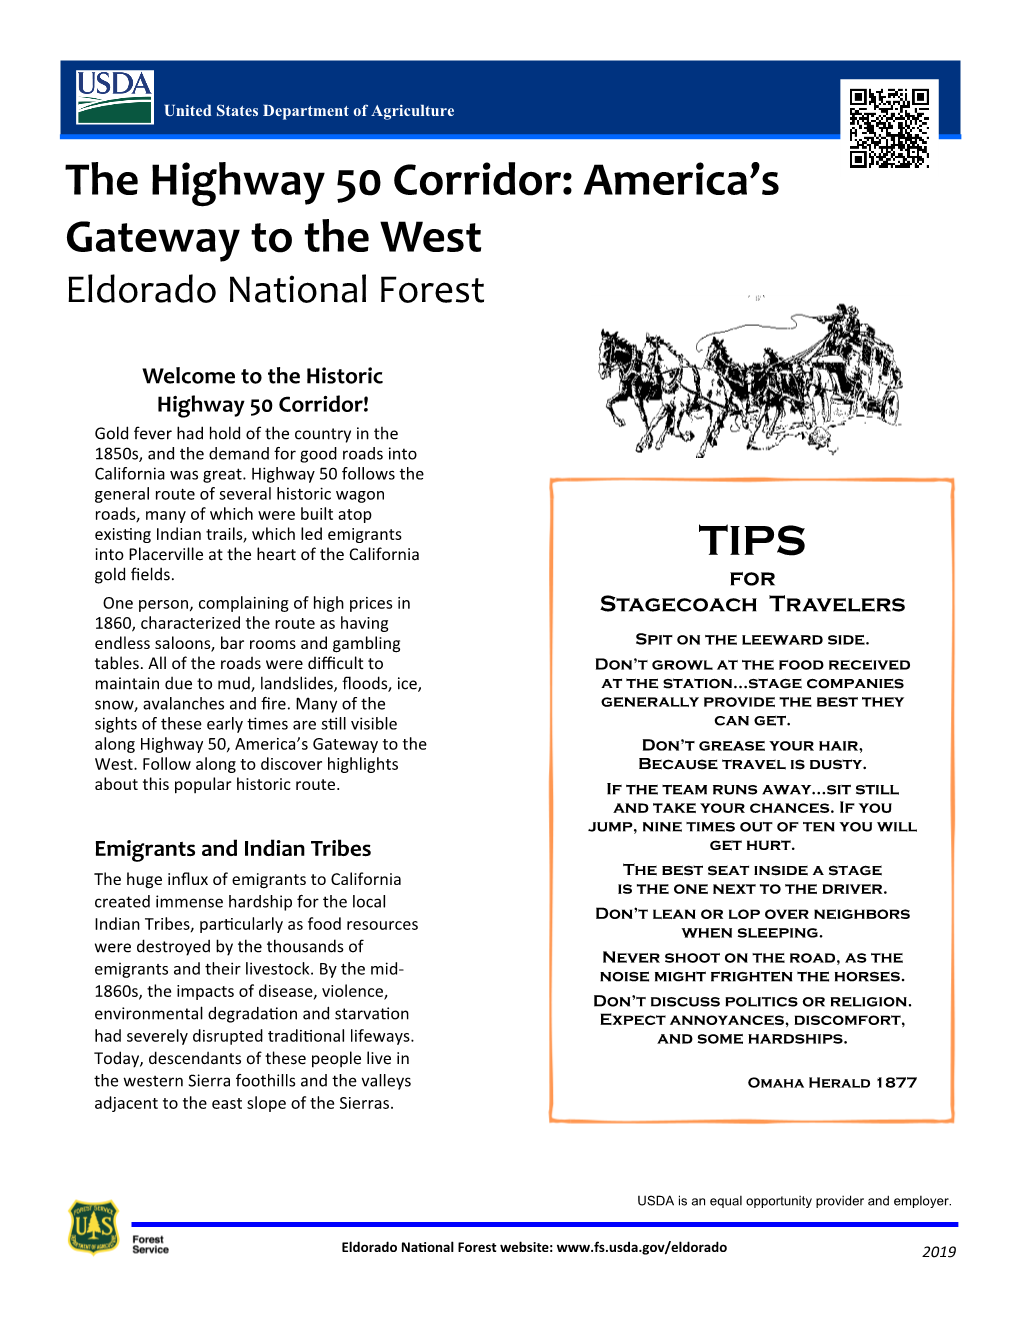 The Highway 50 Corridor: America’S Gateway to the West Eldorado National Forest